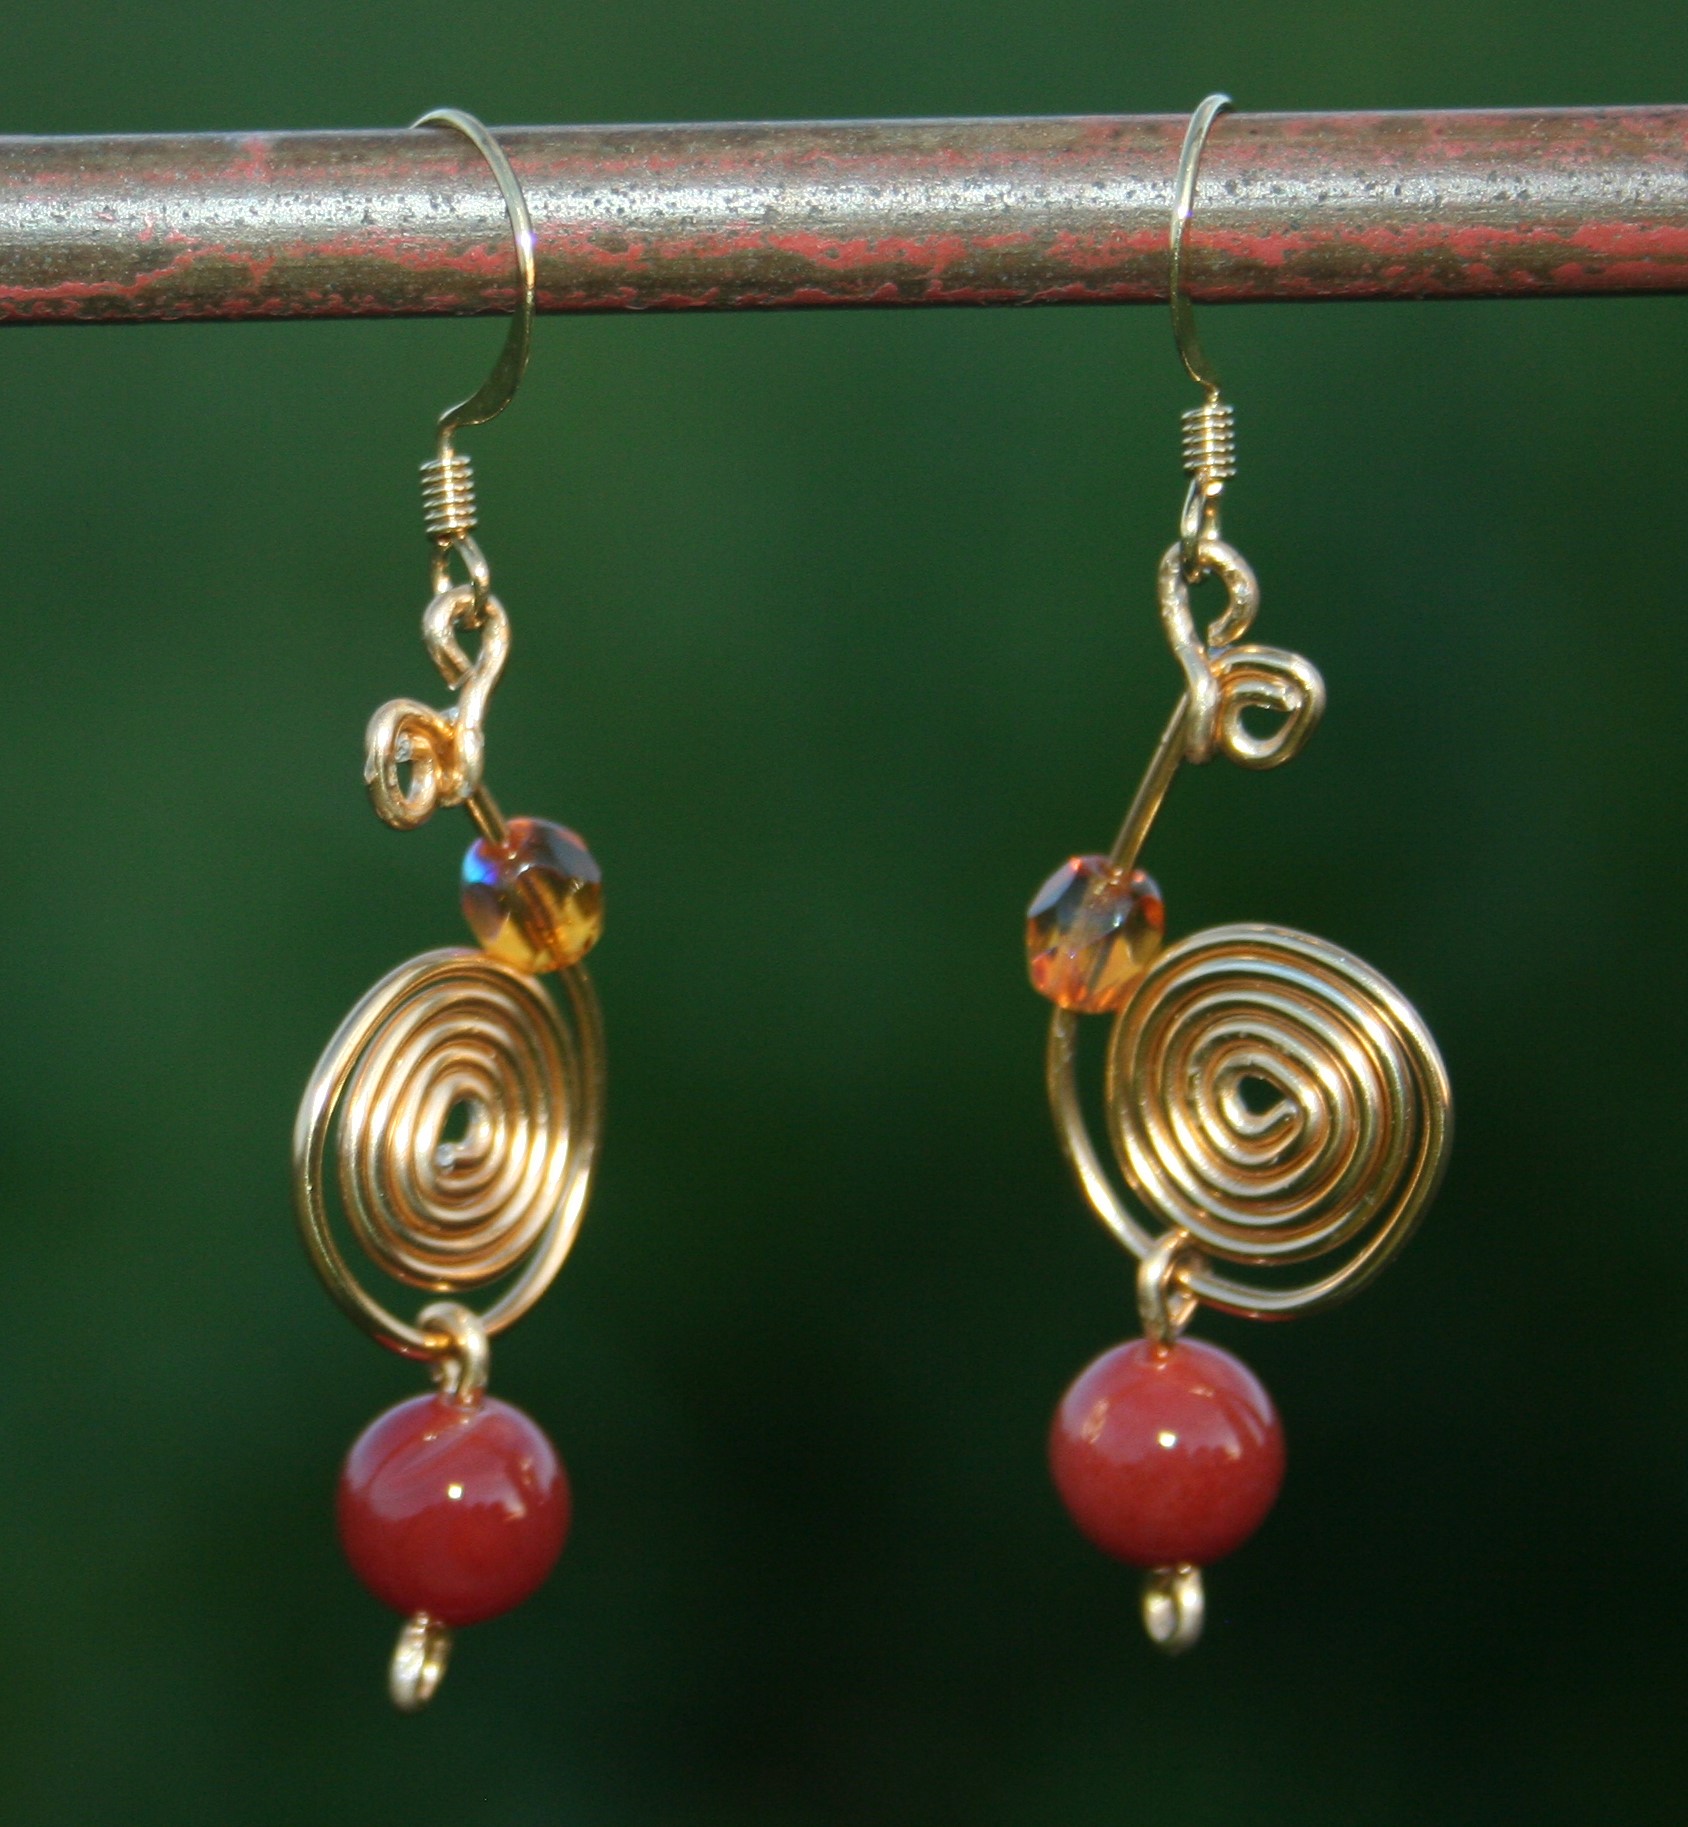 Gold Wire Spiral Earrings - Fair Trade Guatemalan Jewelry